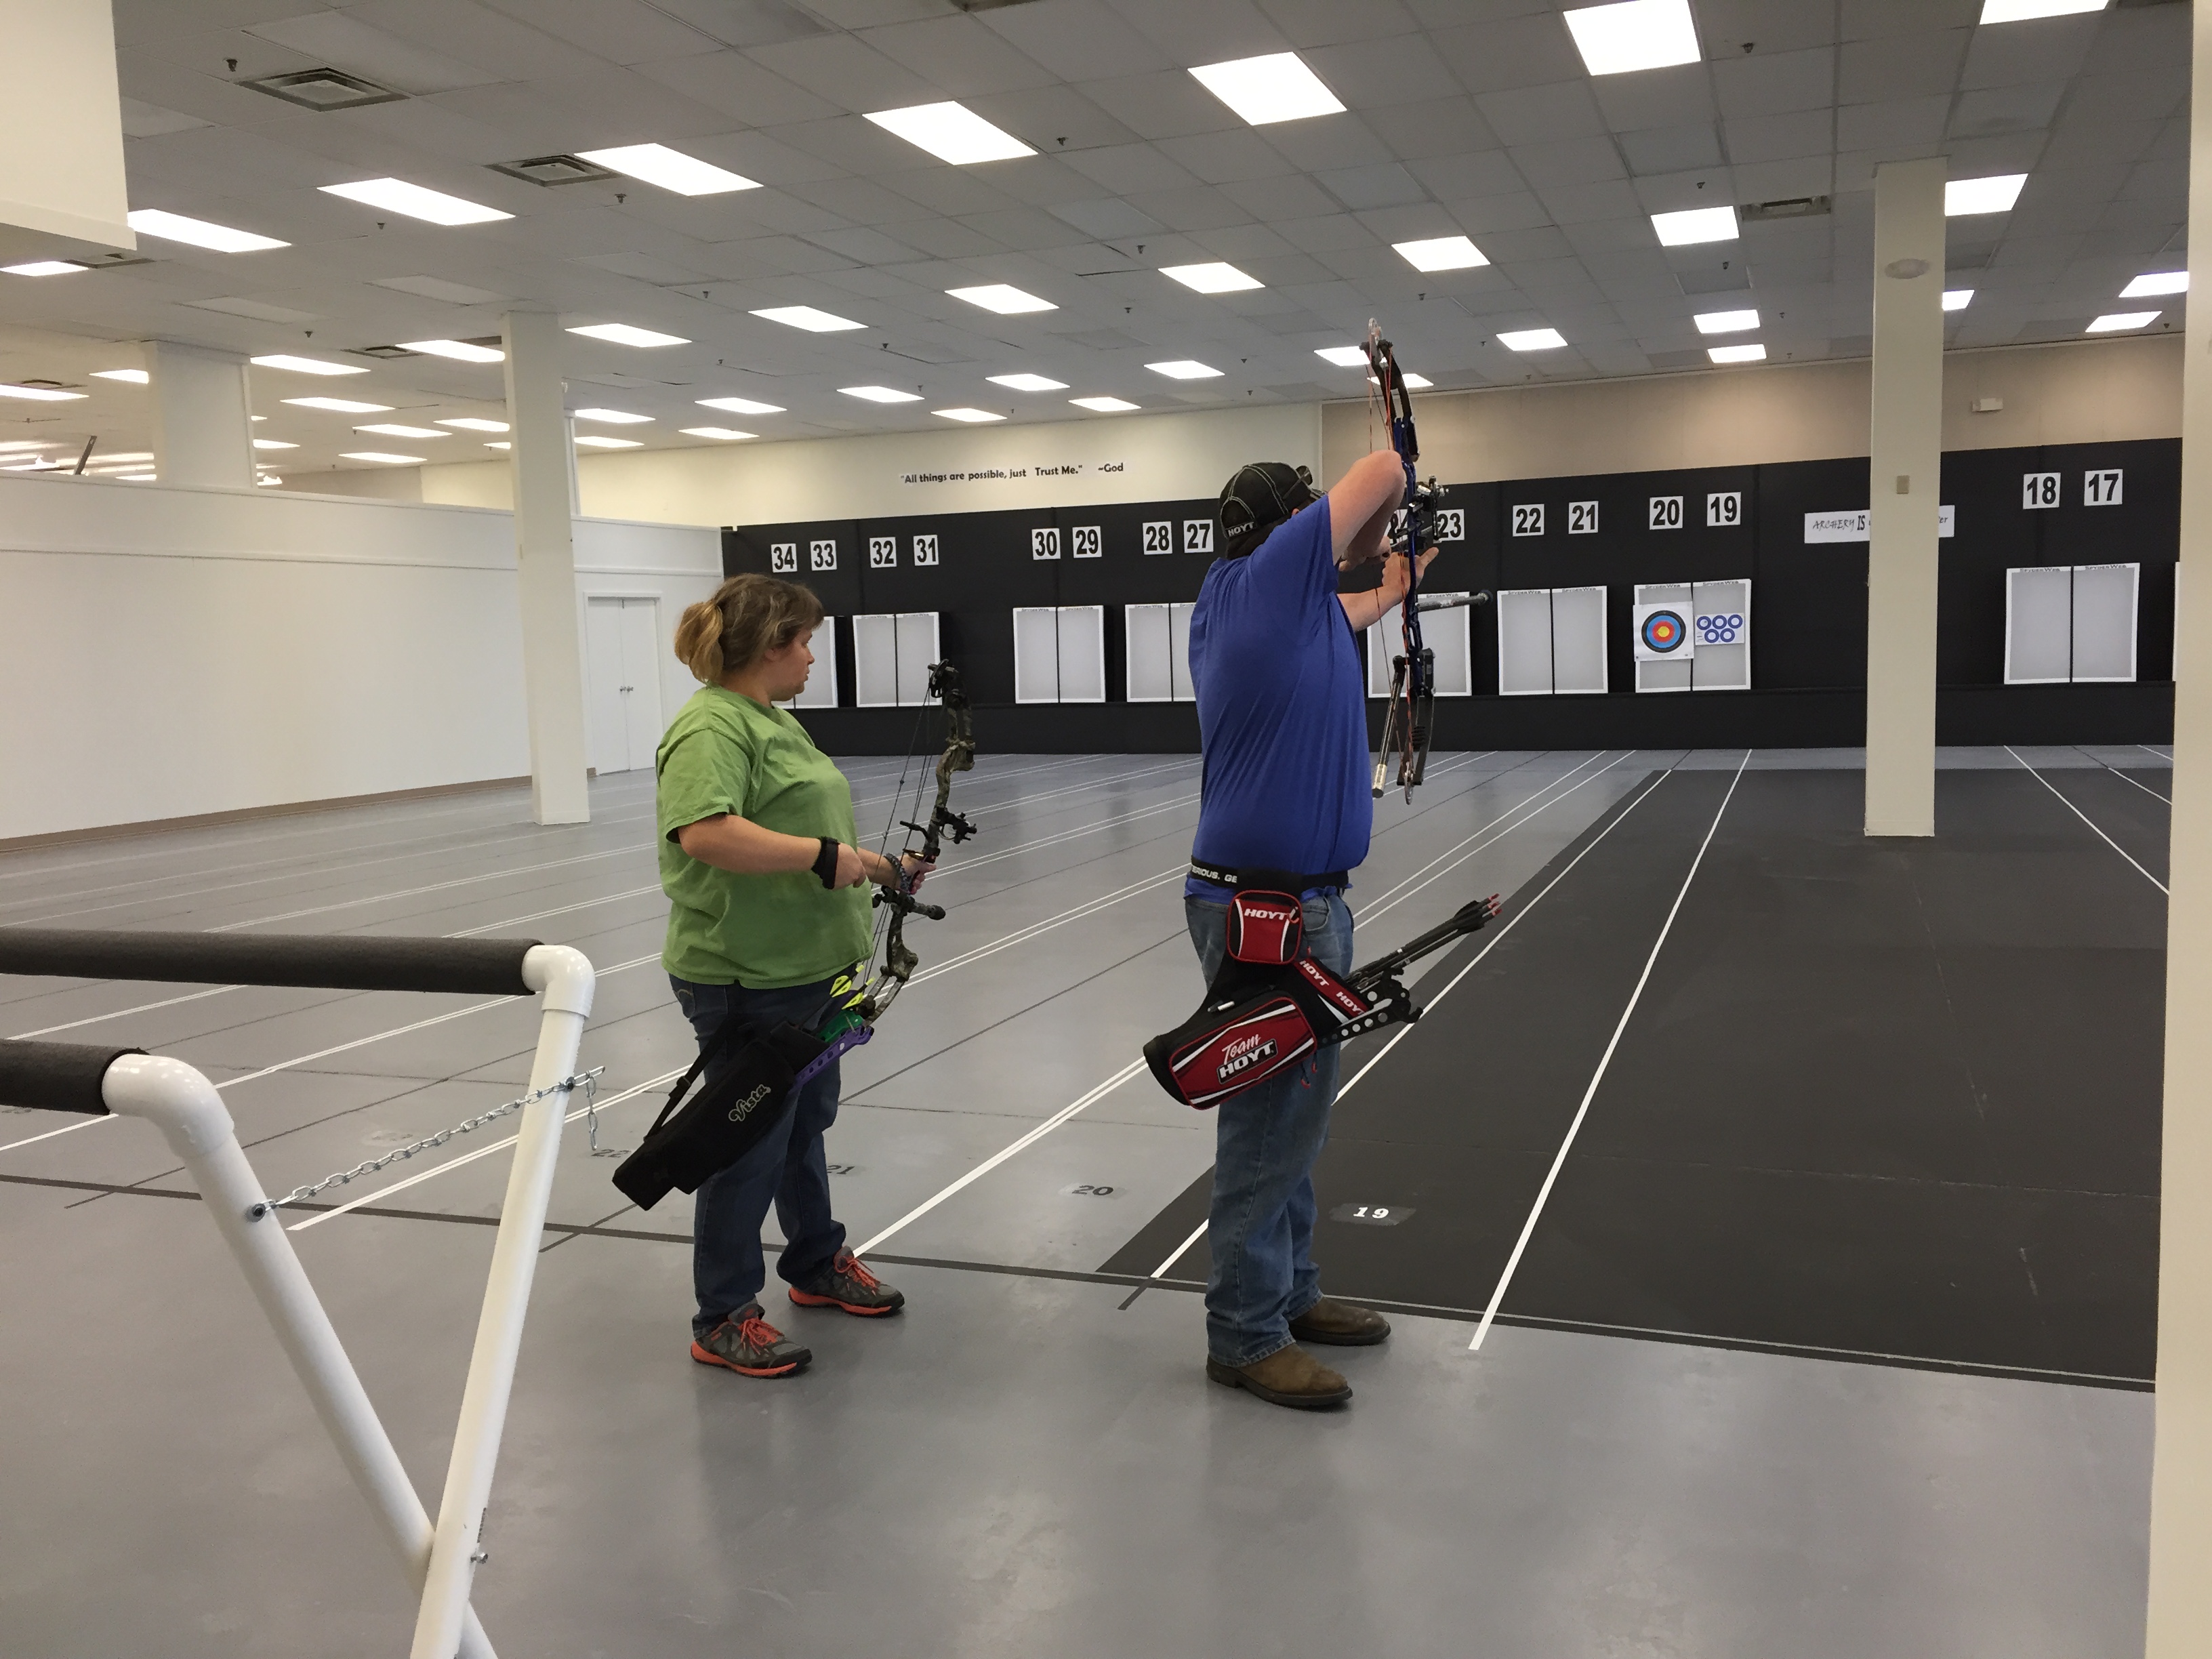 BRAND NEW Indoor Archery Range in Independence, Missouri! Christ Bows